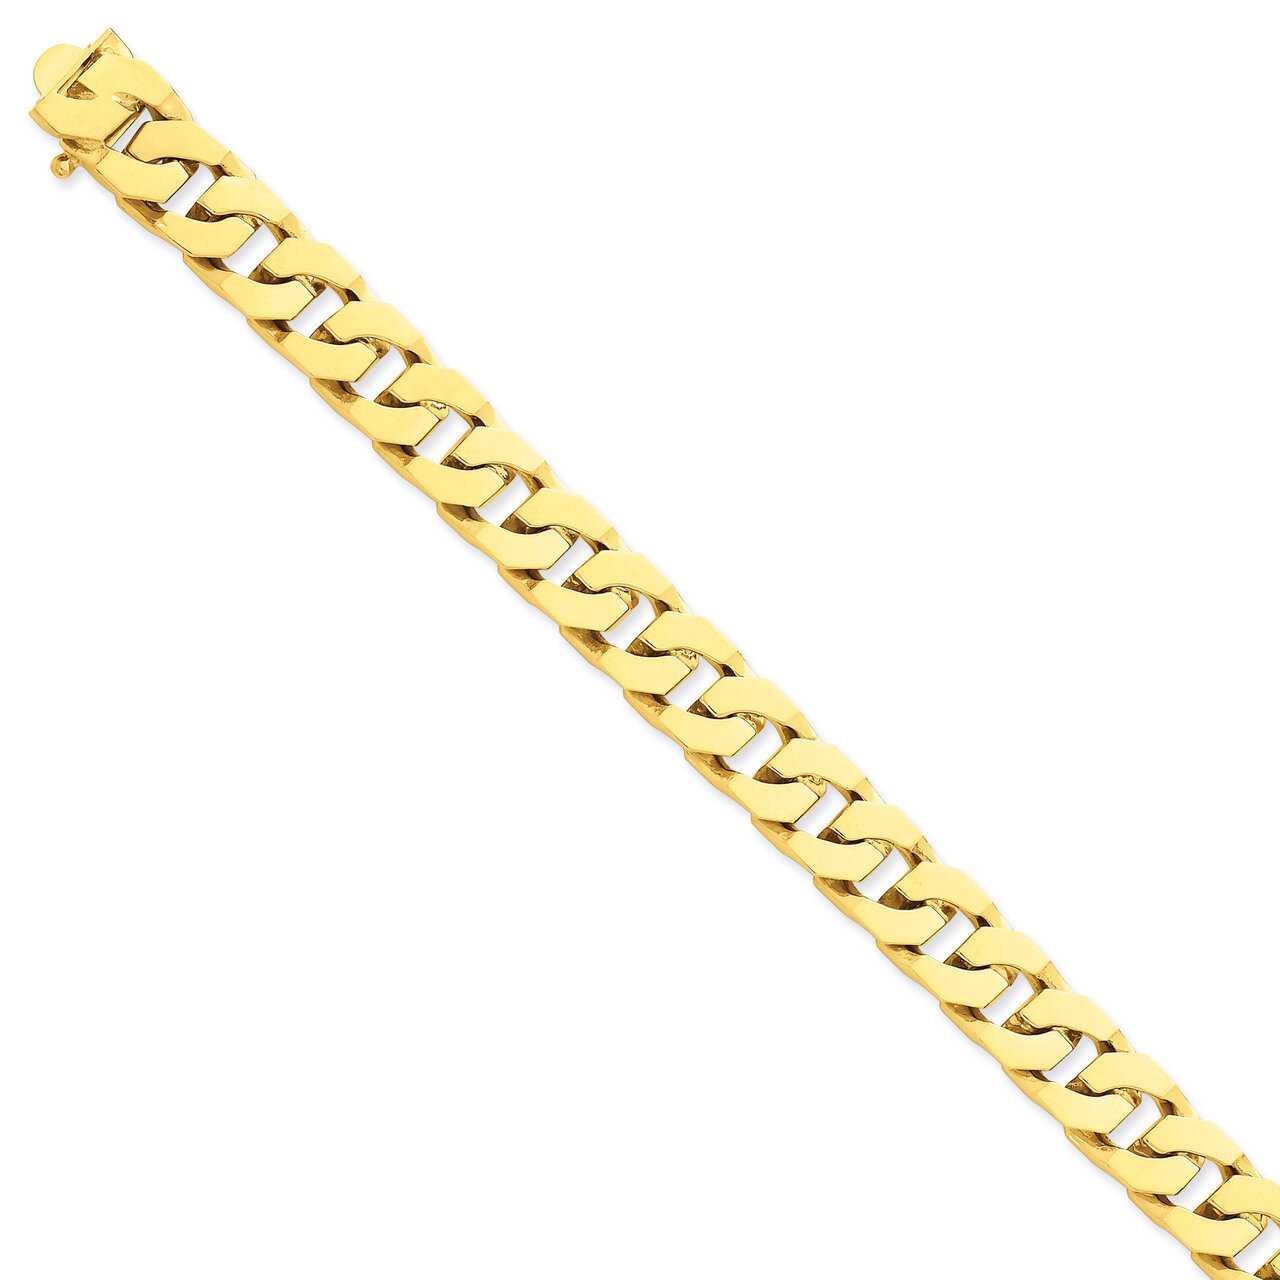 12mm Hand-polished Fancy Link Chain 8 Inch 14k Gold LK139-8